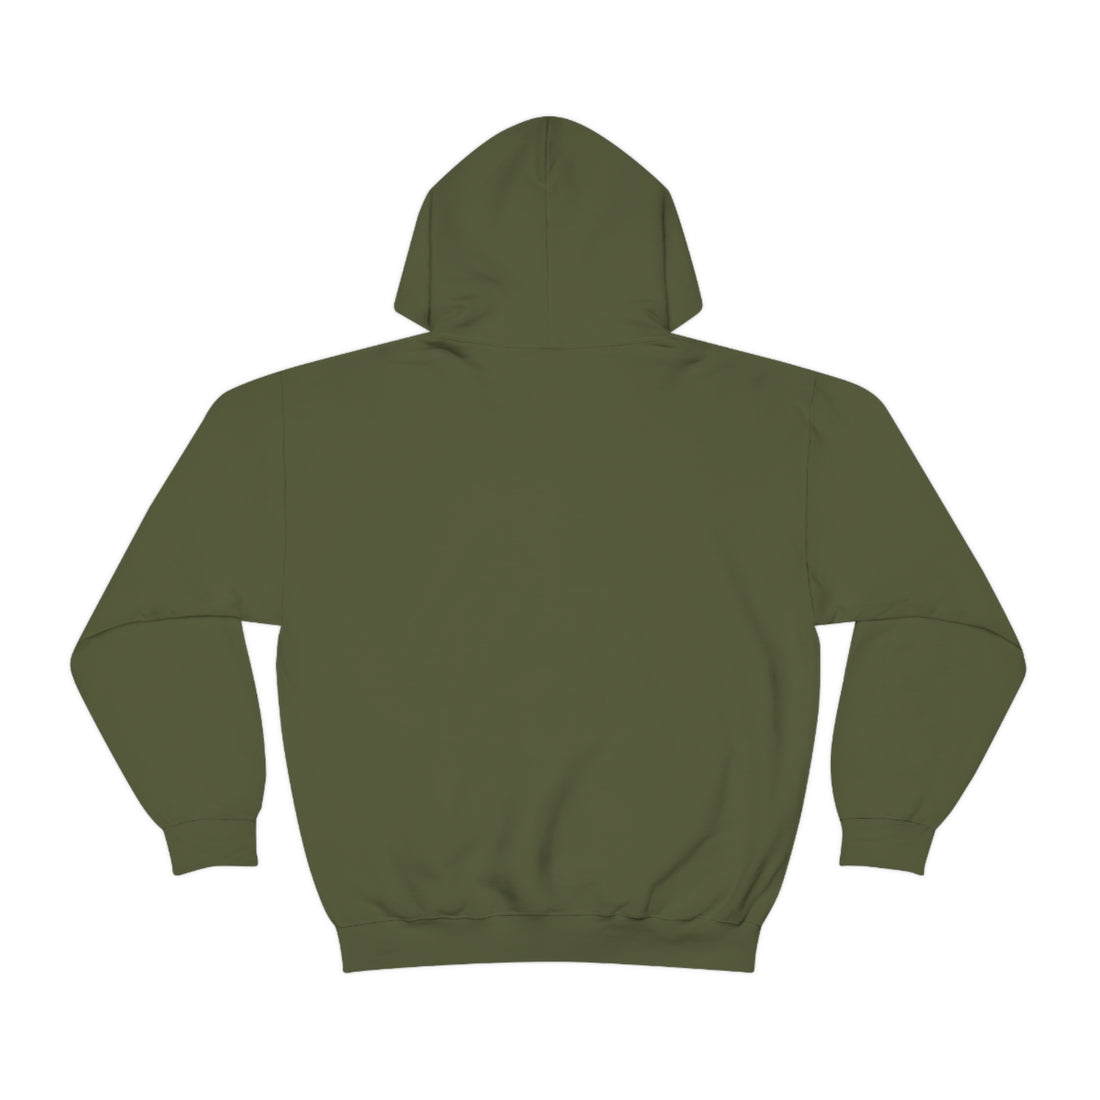 8th Grade Level Complete - Unisex Heavy Blend™ Hooded Sweatshirt